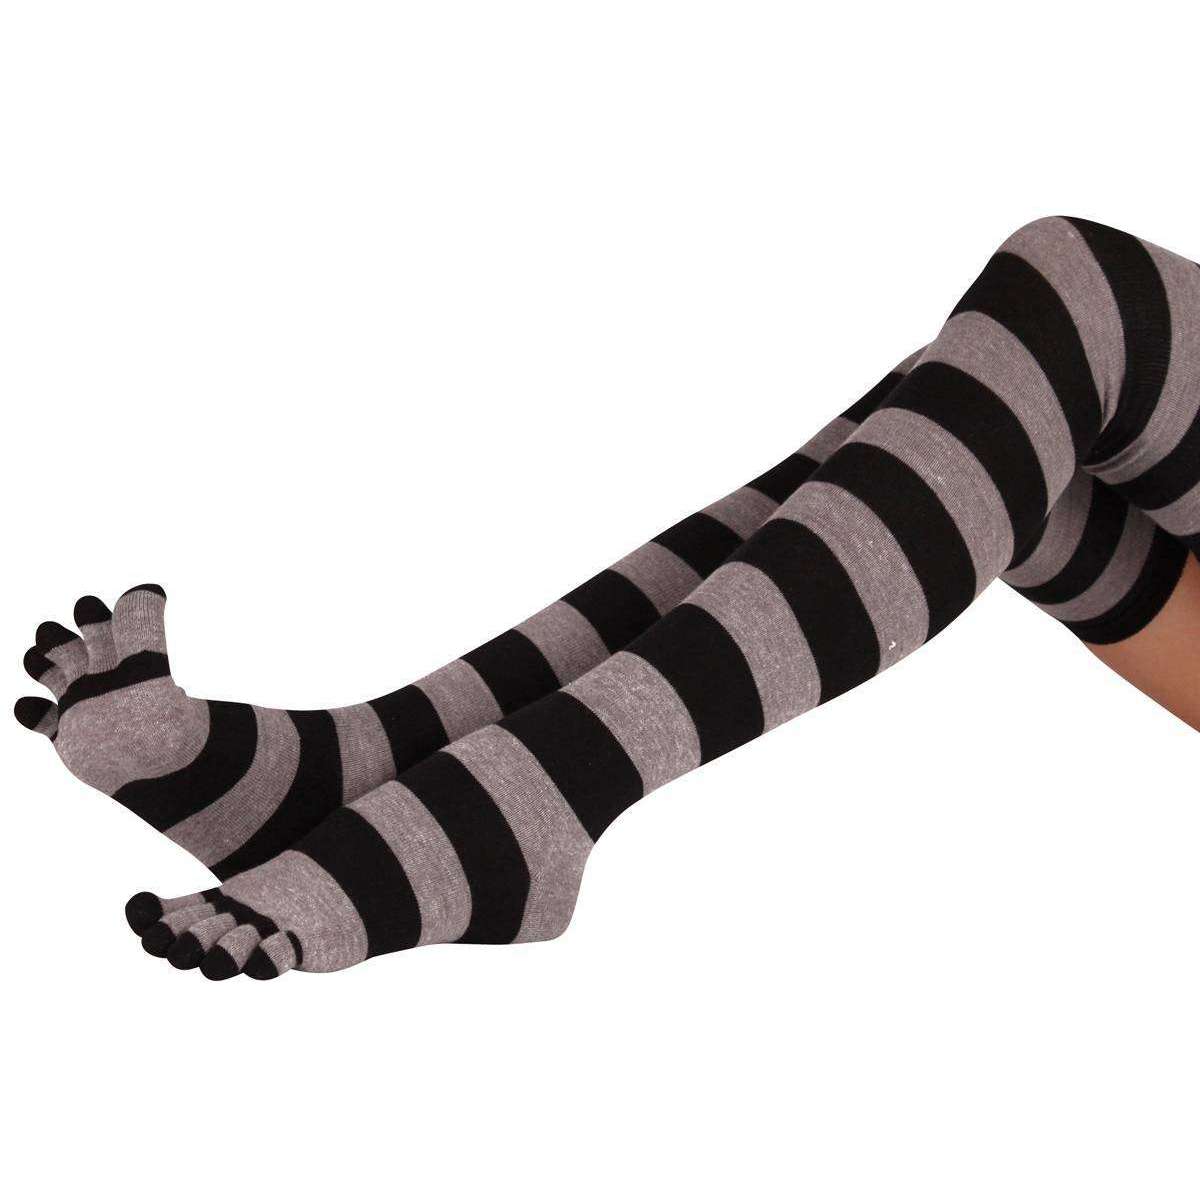 Womens TOETOE Black/Grey Striped Over The Knee Toe Socks